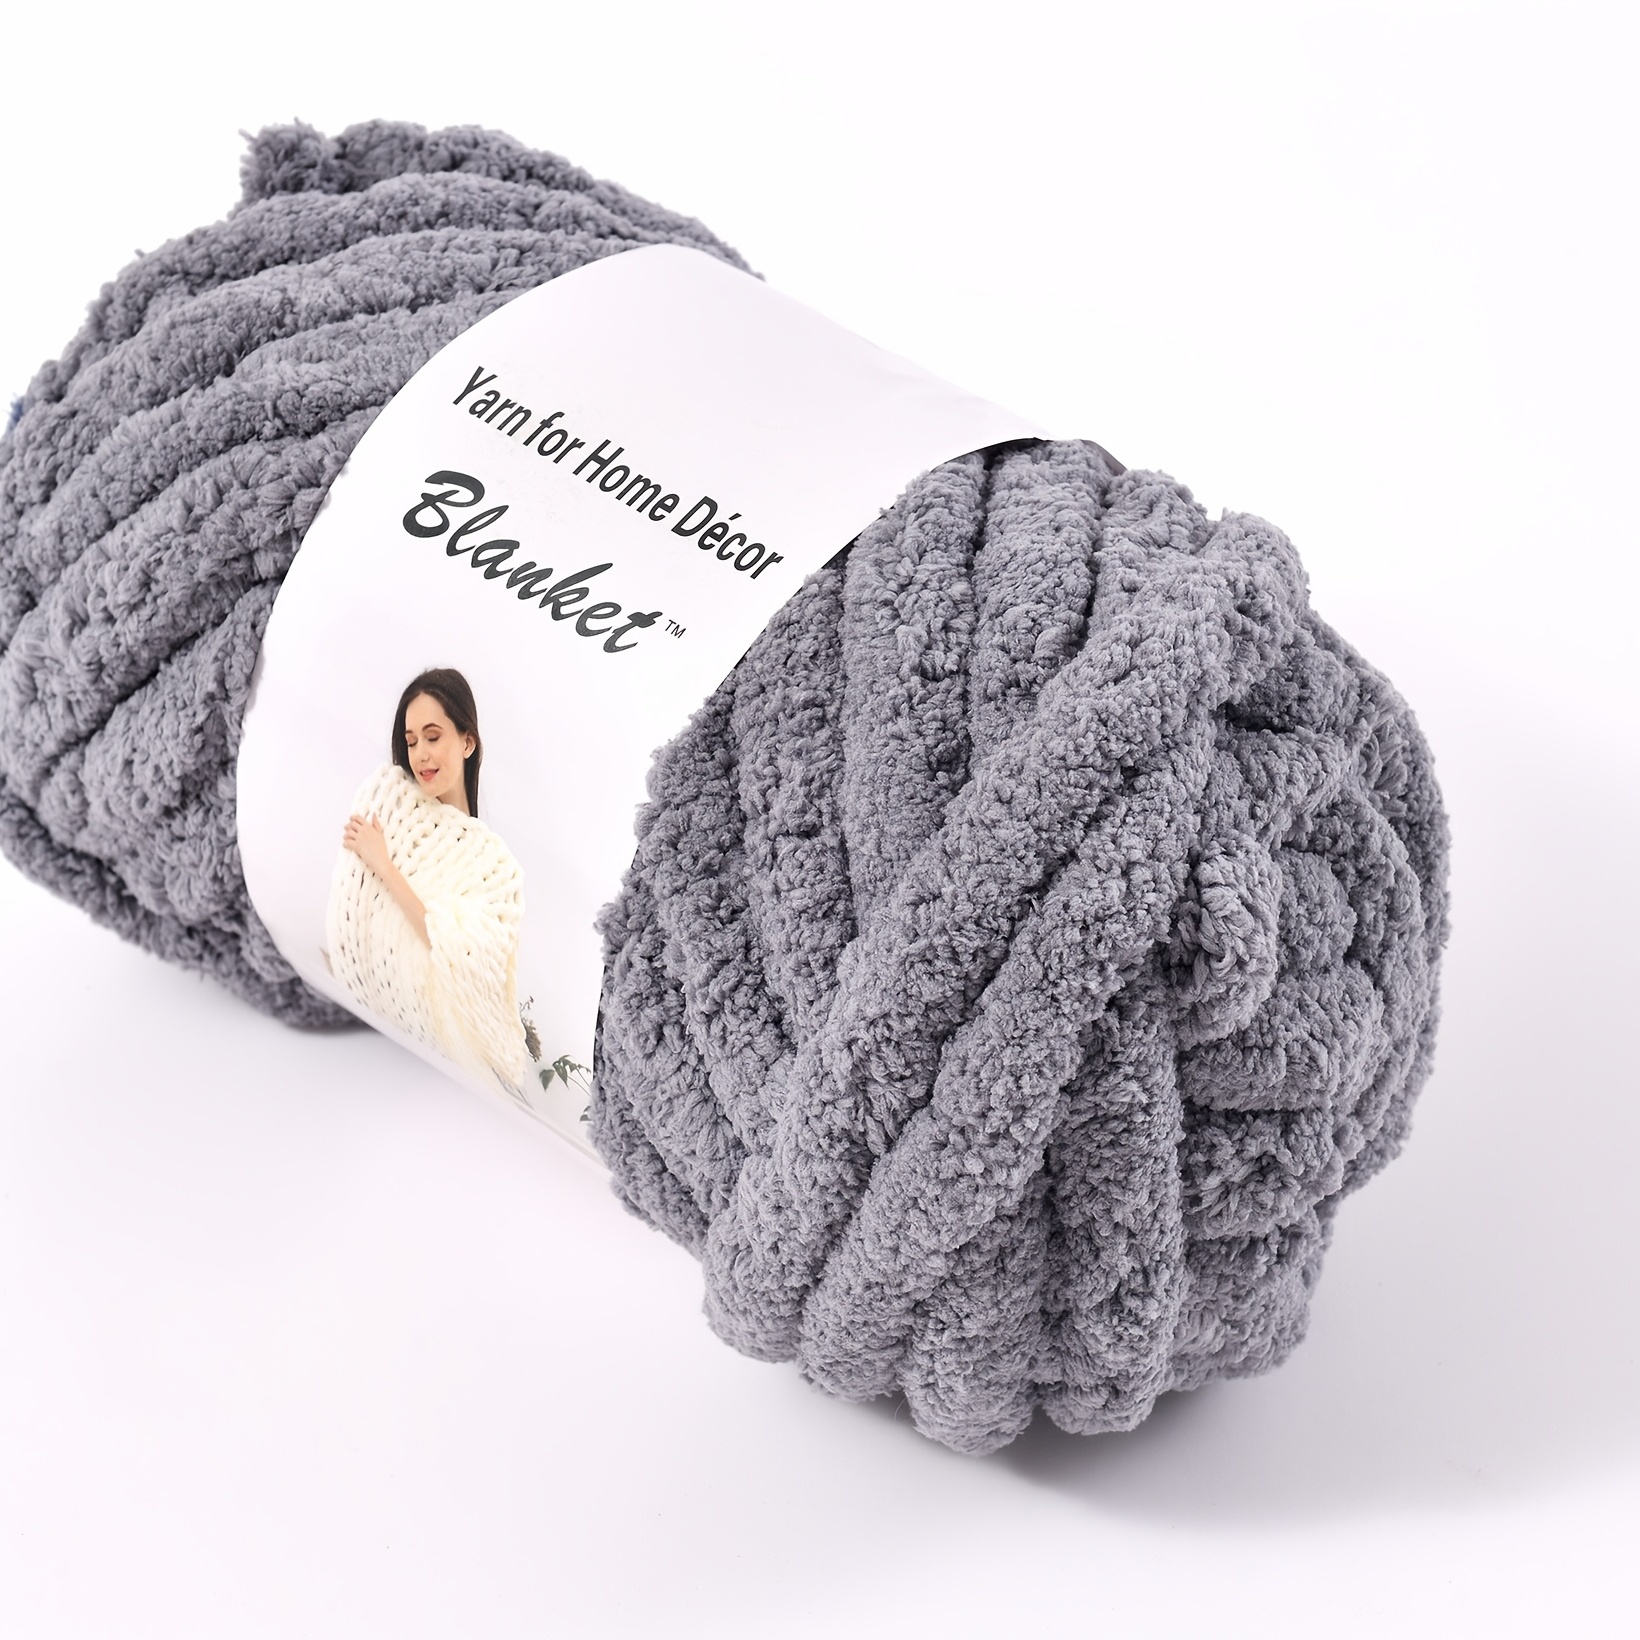 Chenille Chunky Yarn For Diy Knitting Blanket Cushion, Bed Sofa Home  Decor,, 24yards - Temu Germany